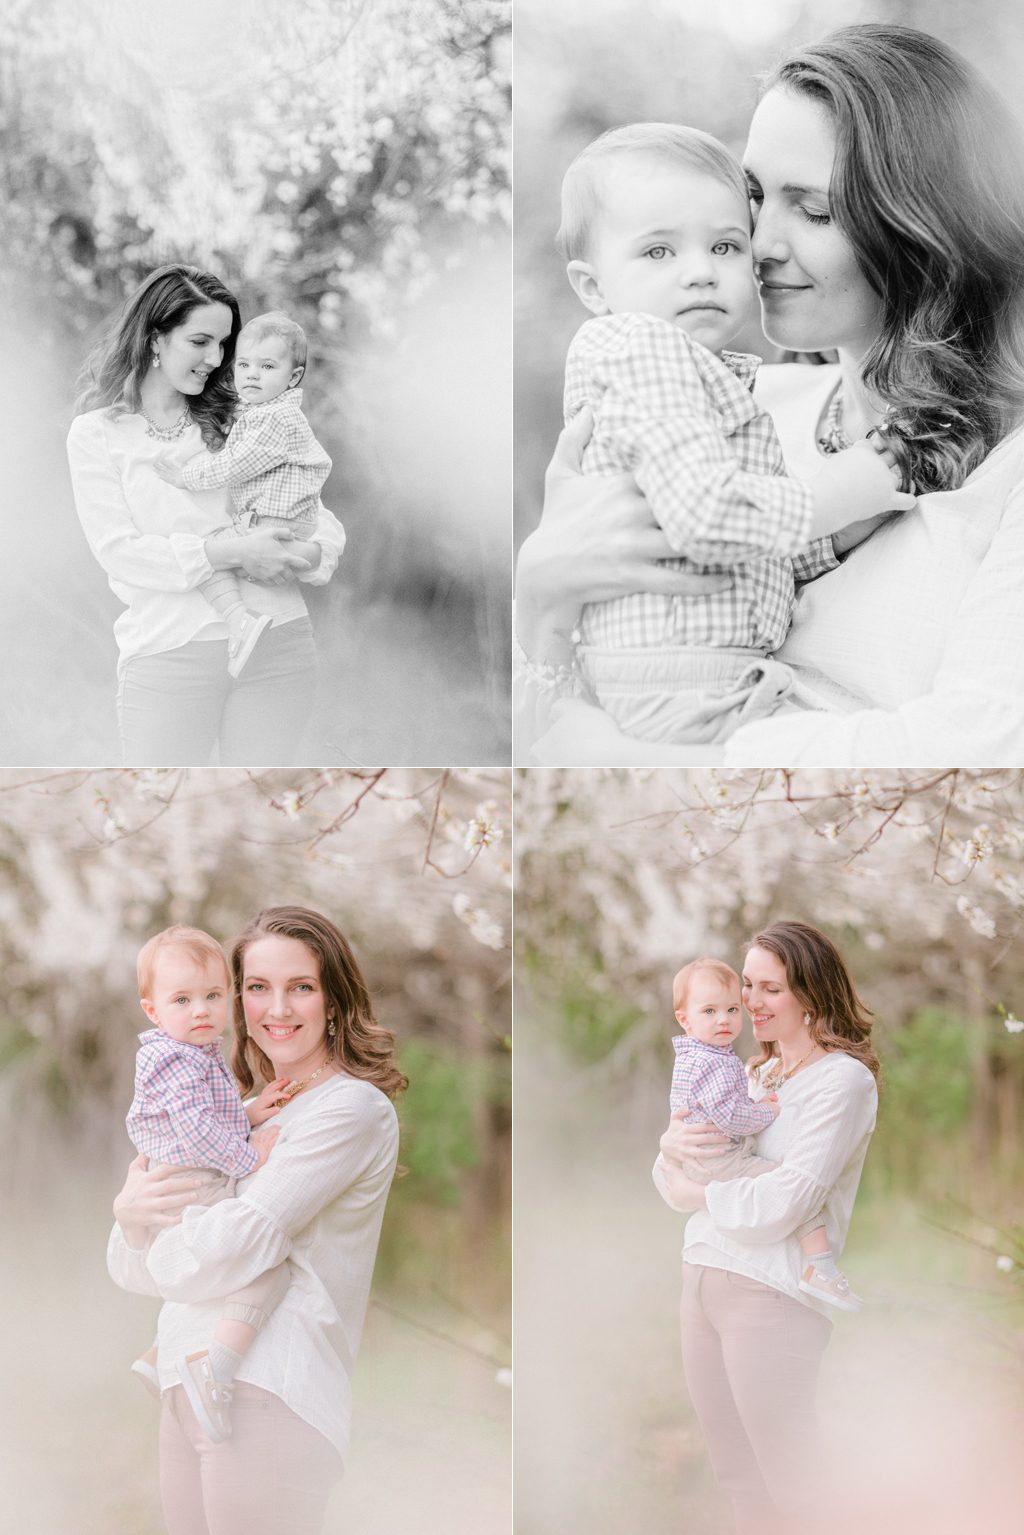 Spring Motherhood photography in Watkinsville, GA.